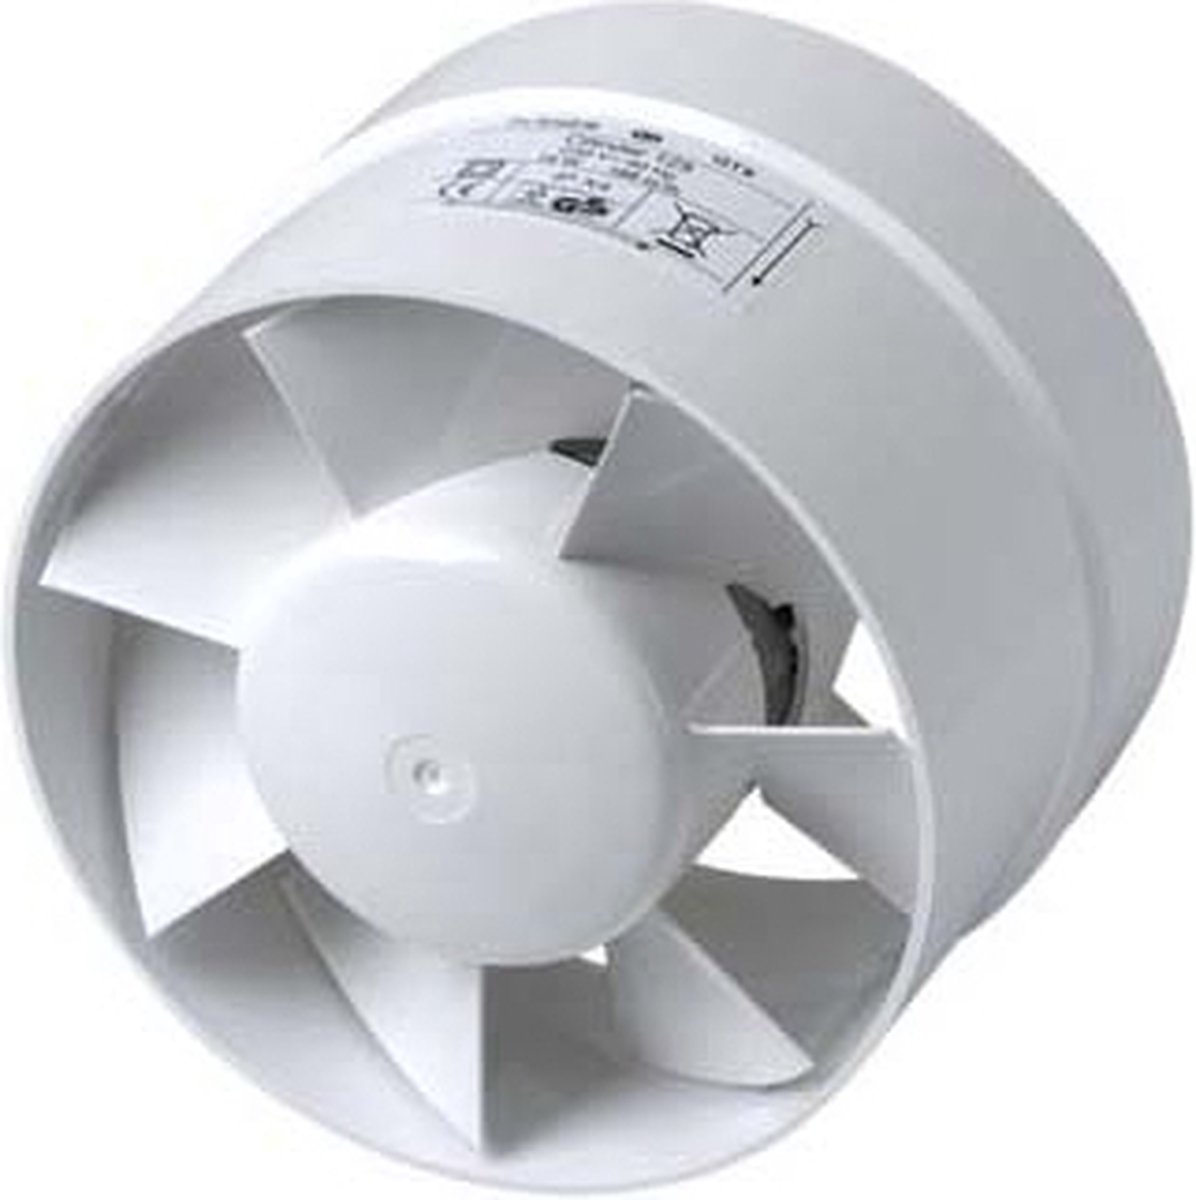 Plieger Cilinder Ventilator - 105 m³ x Ø 100 mm - Wit | bol.com